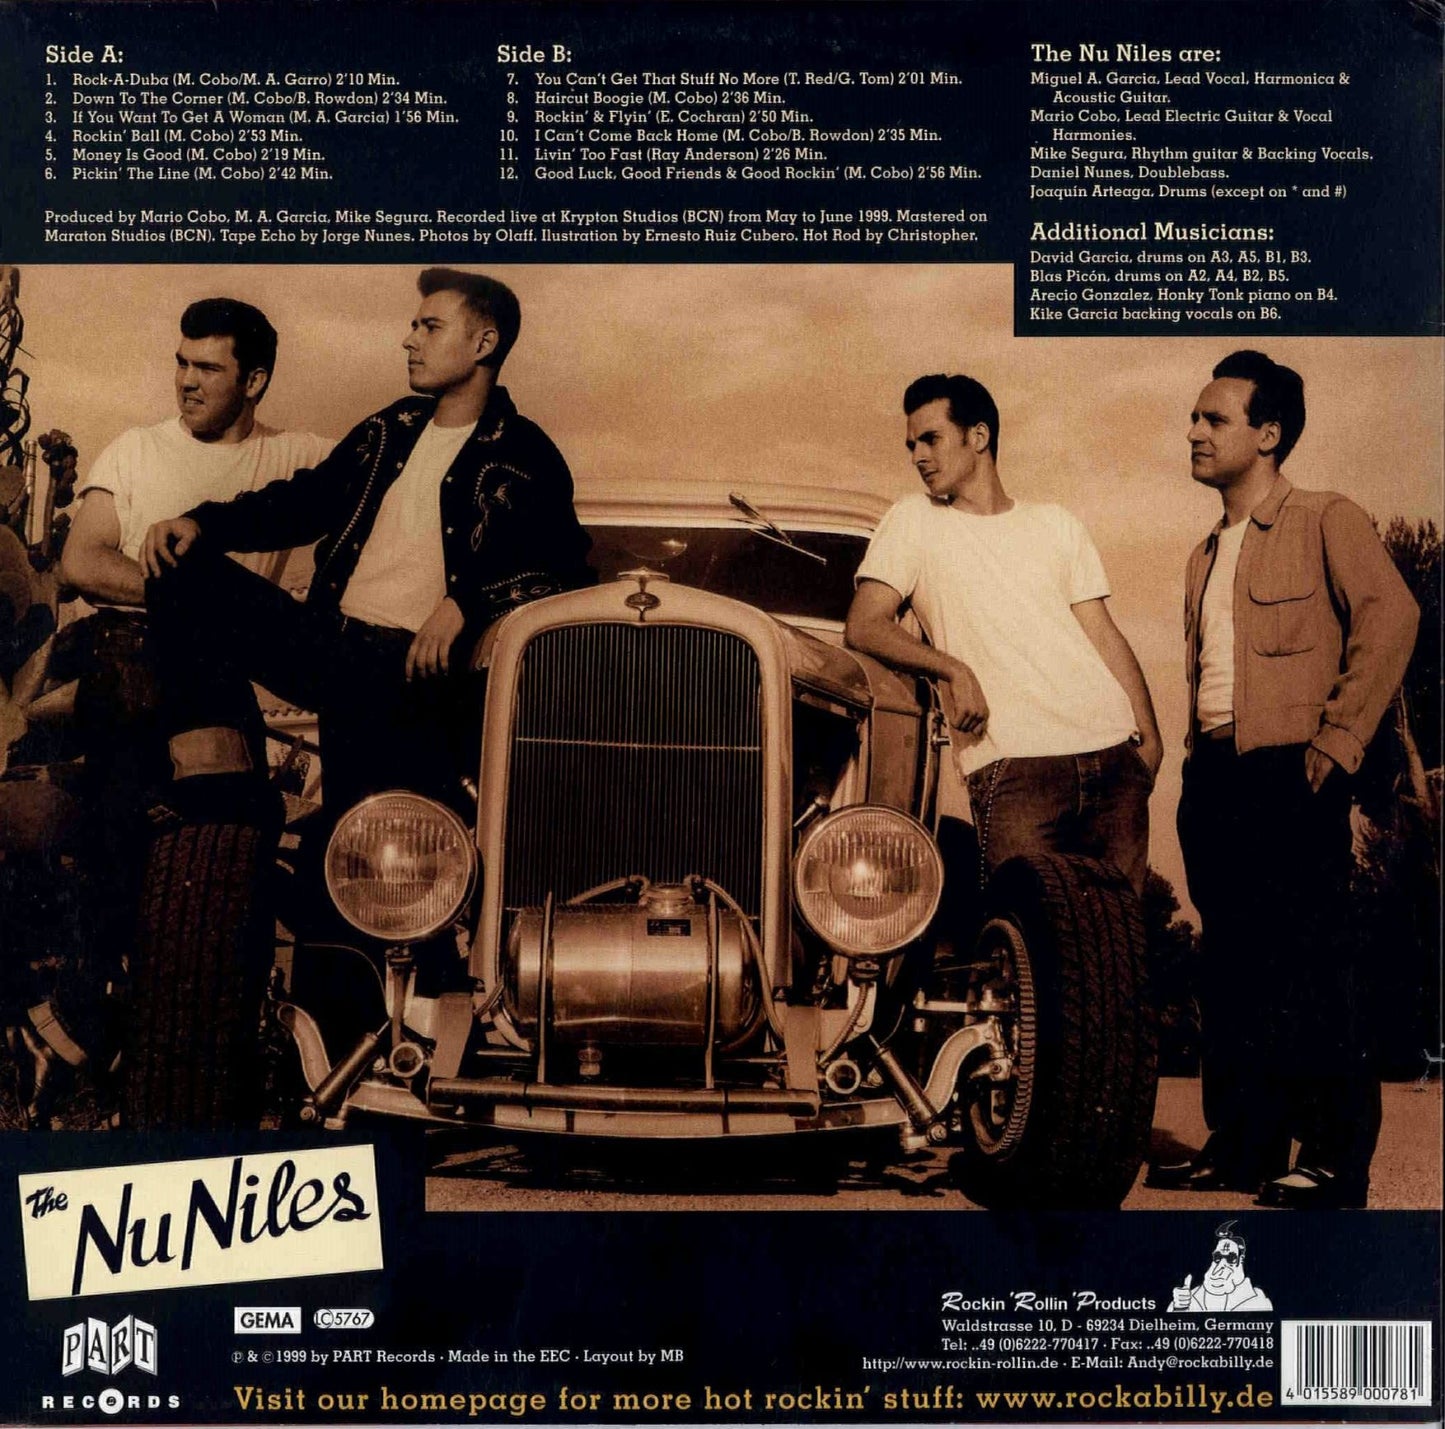 10inch - Nu Niles - Good Luck, Good Friends, Good Rockin